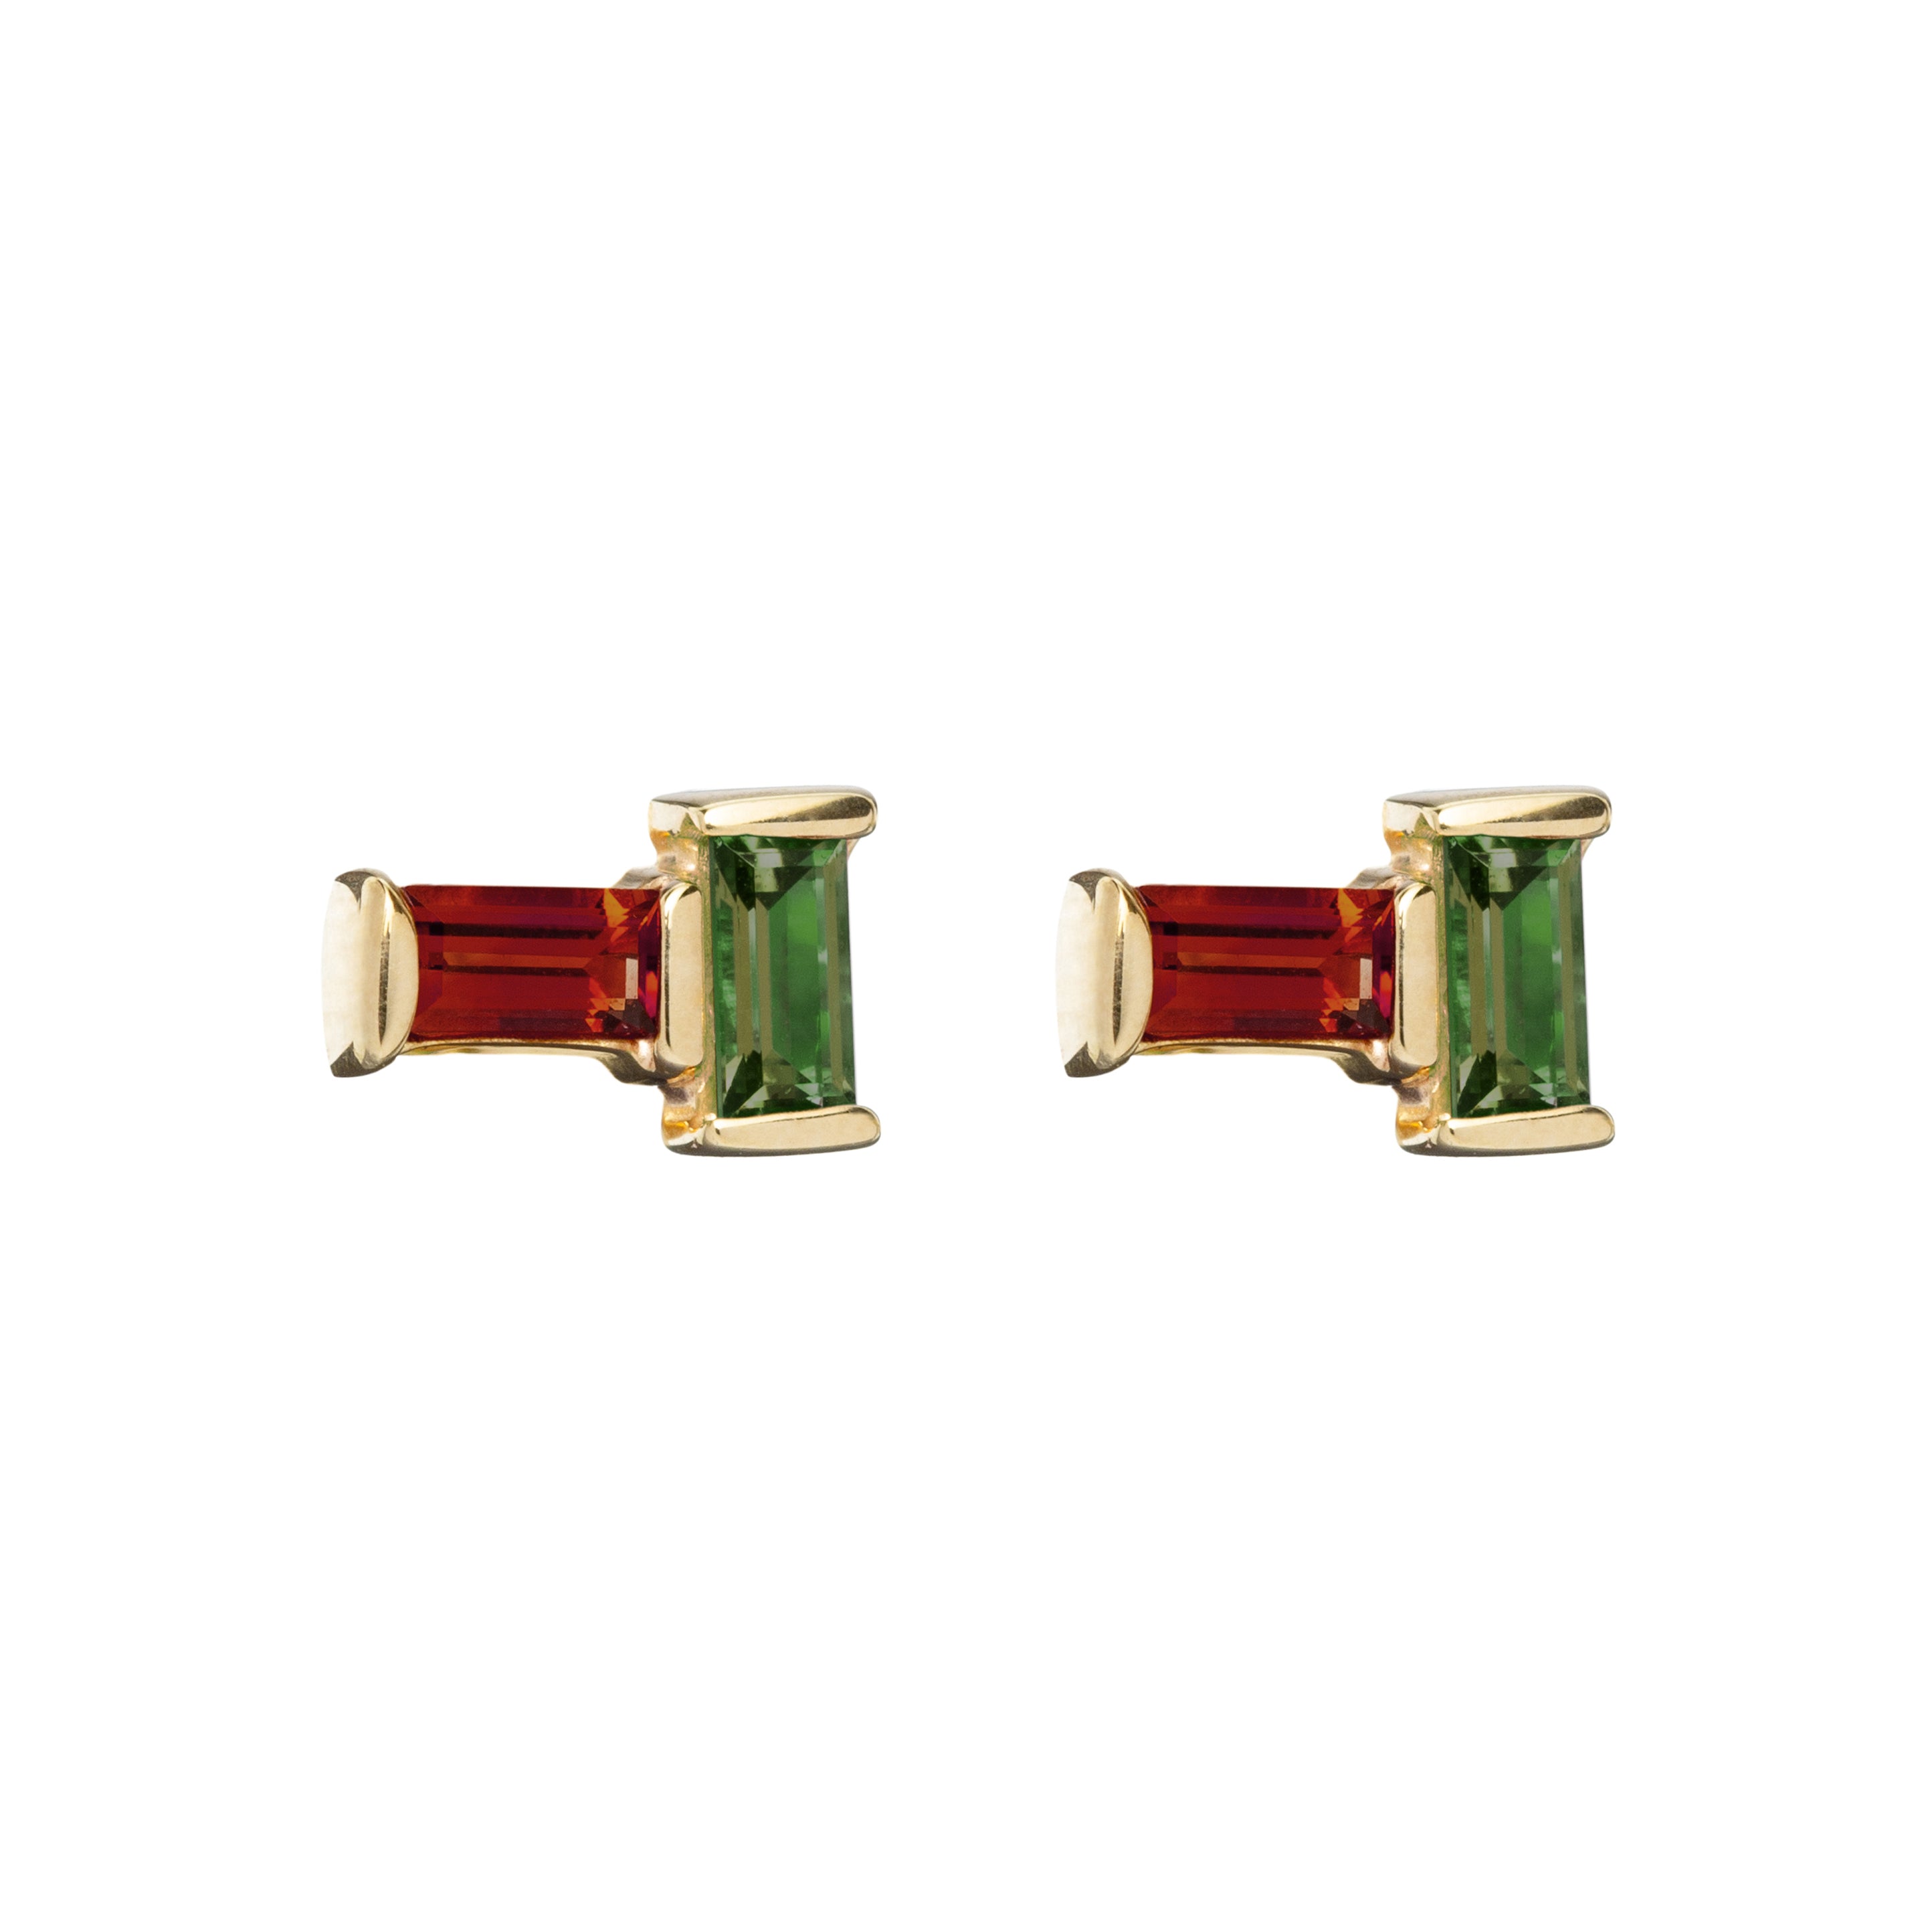 Gold earrings pair with baguette cut garnet and green tourmaline